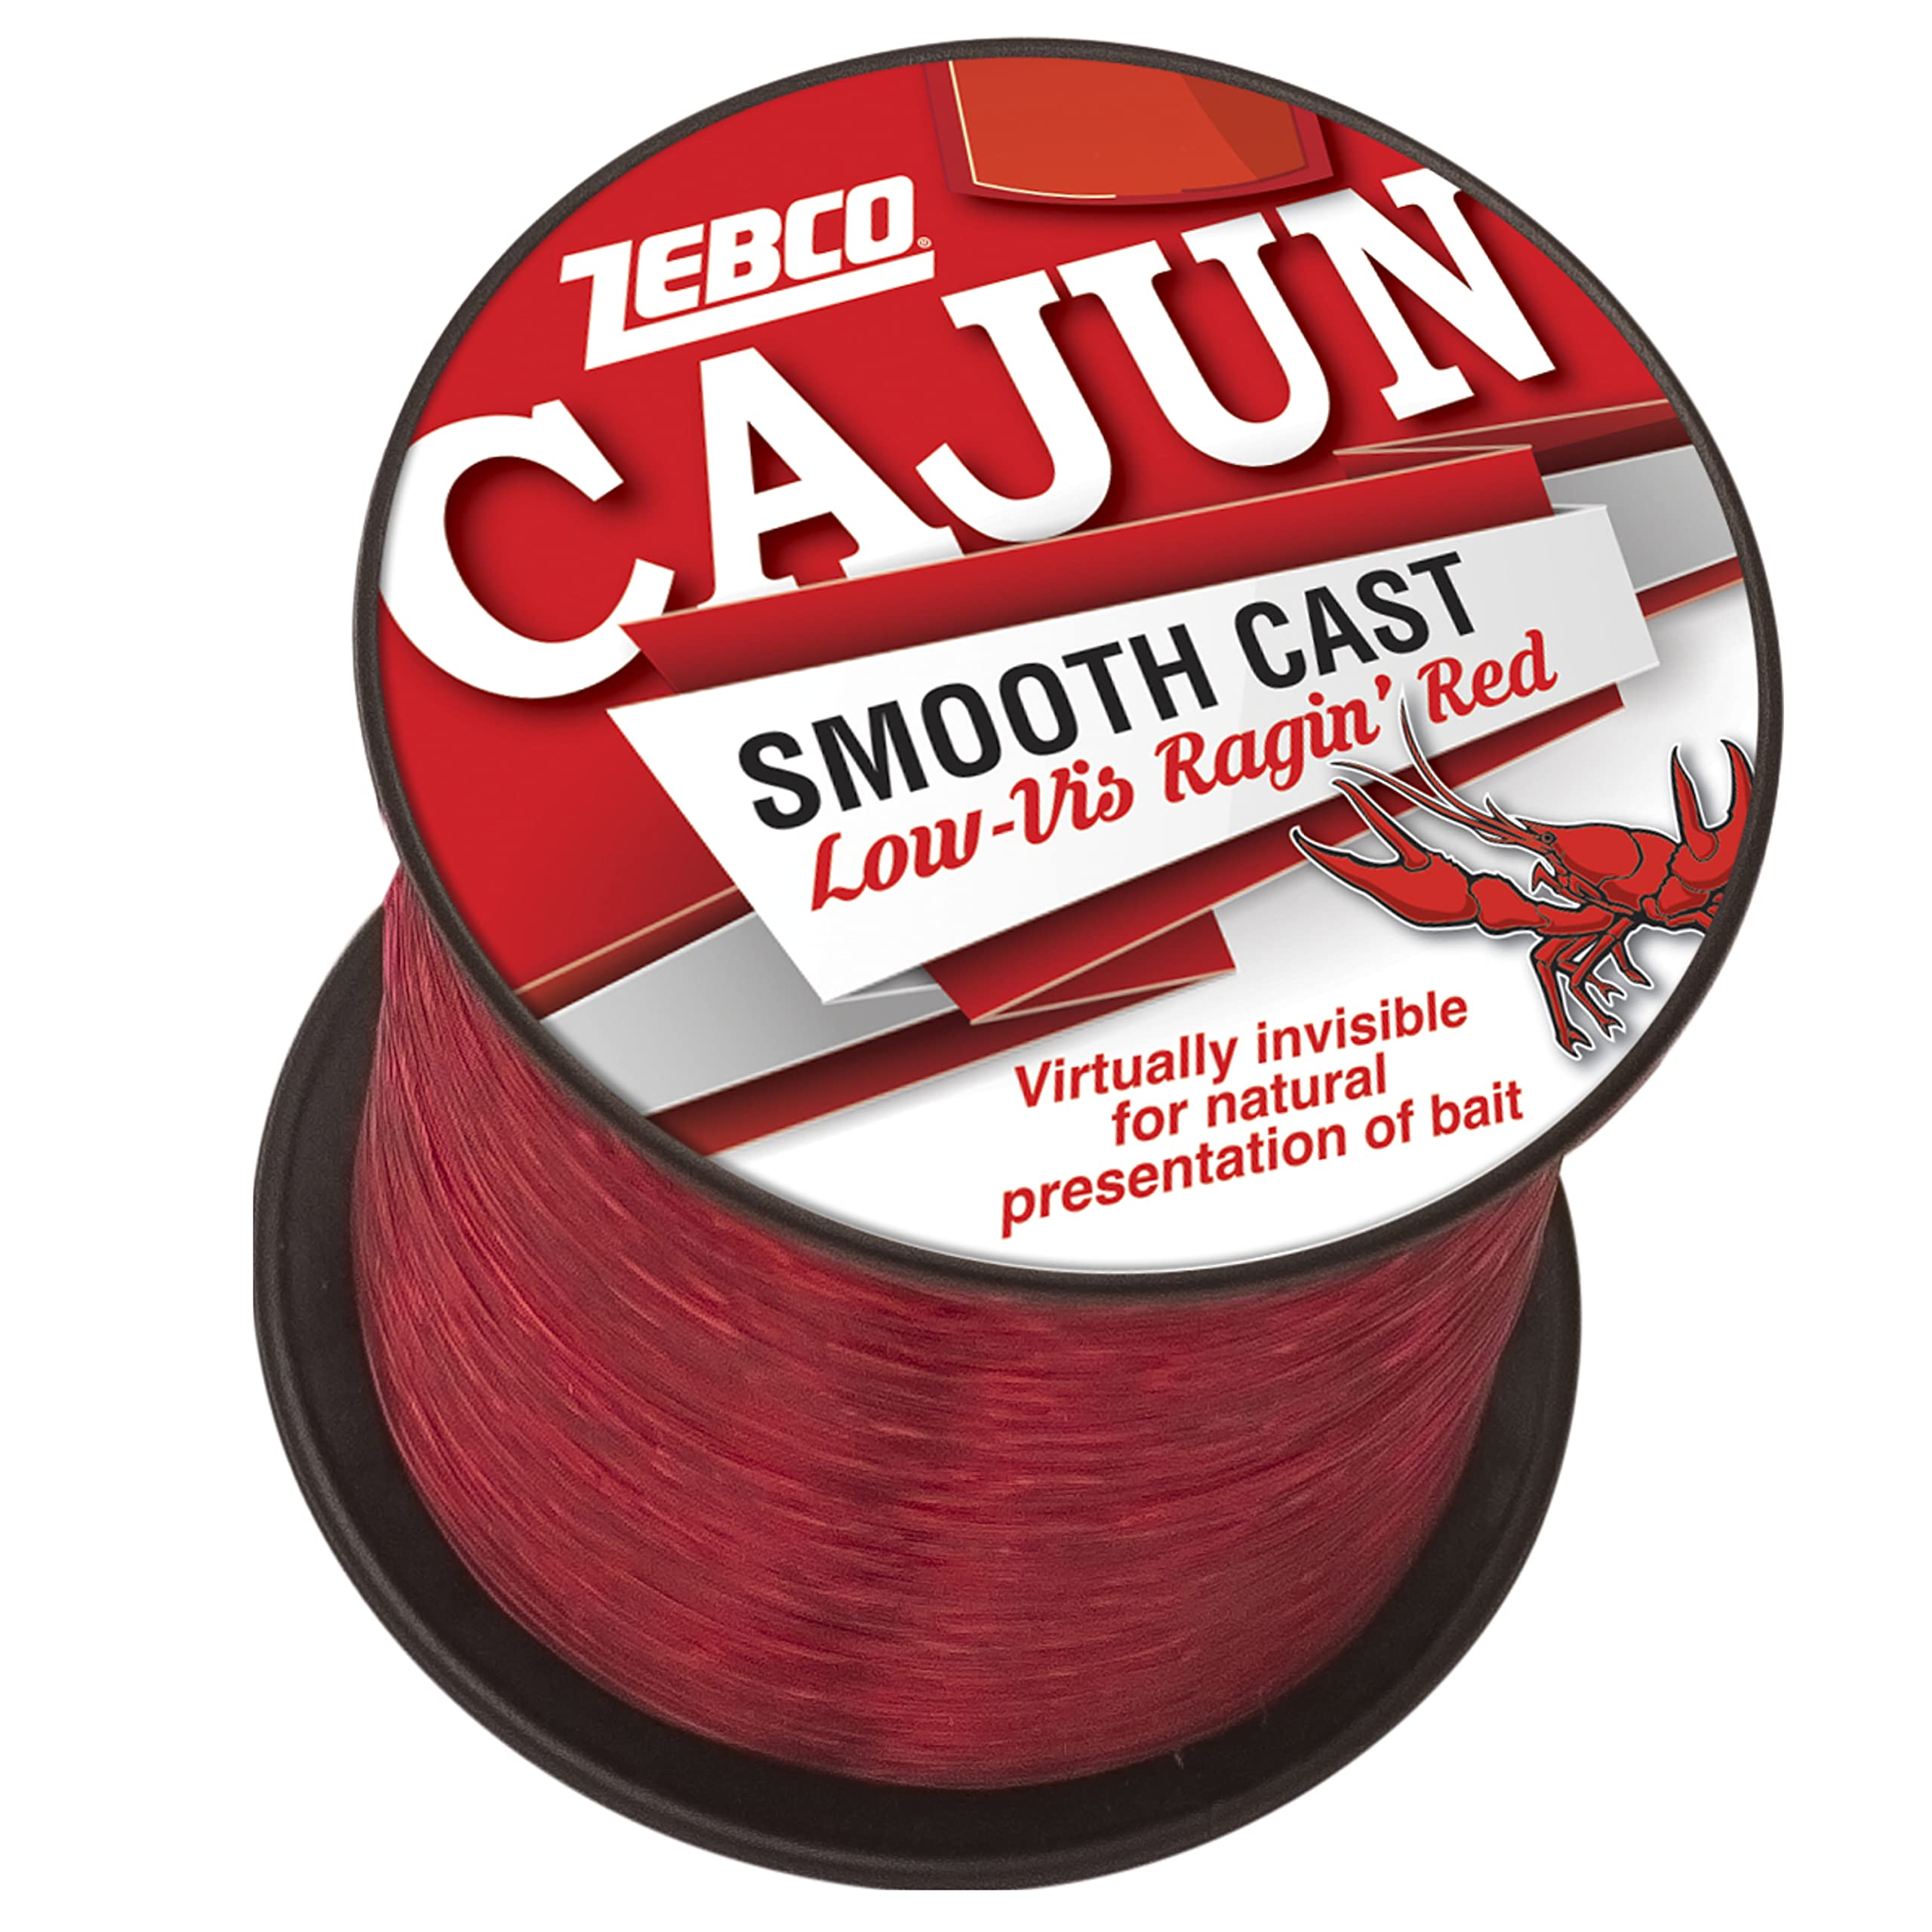 Zebco Cajun Line Smooth Cast Fishing Line Low Vis Ragin Red Quarter Pound  Spool 1450-yard10